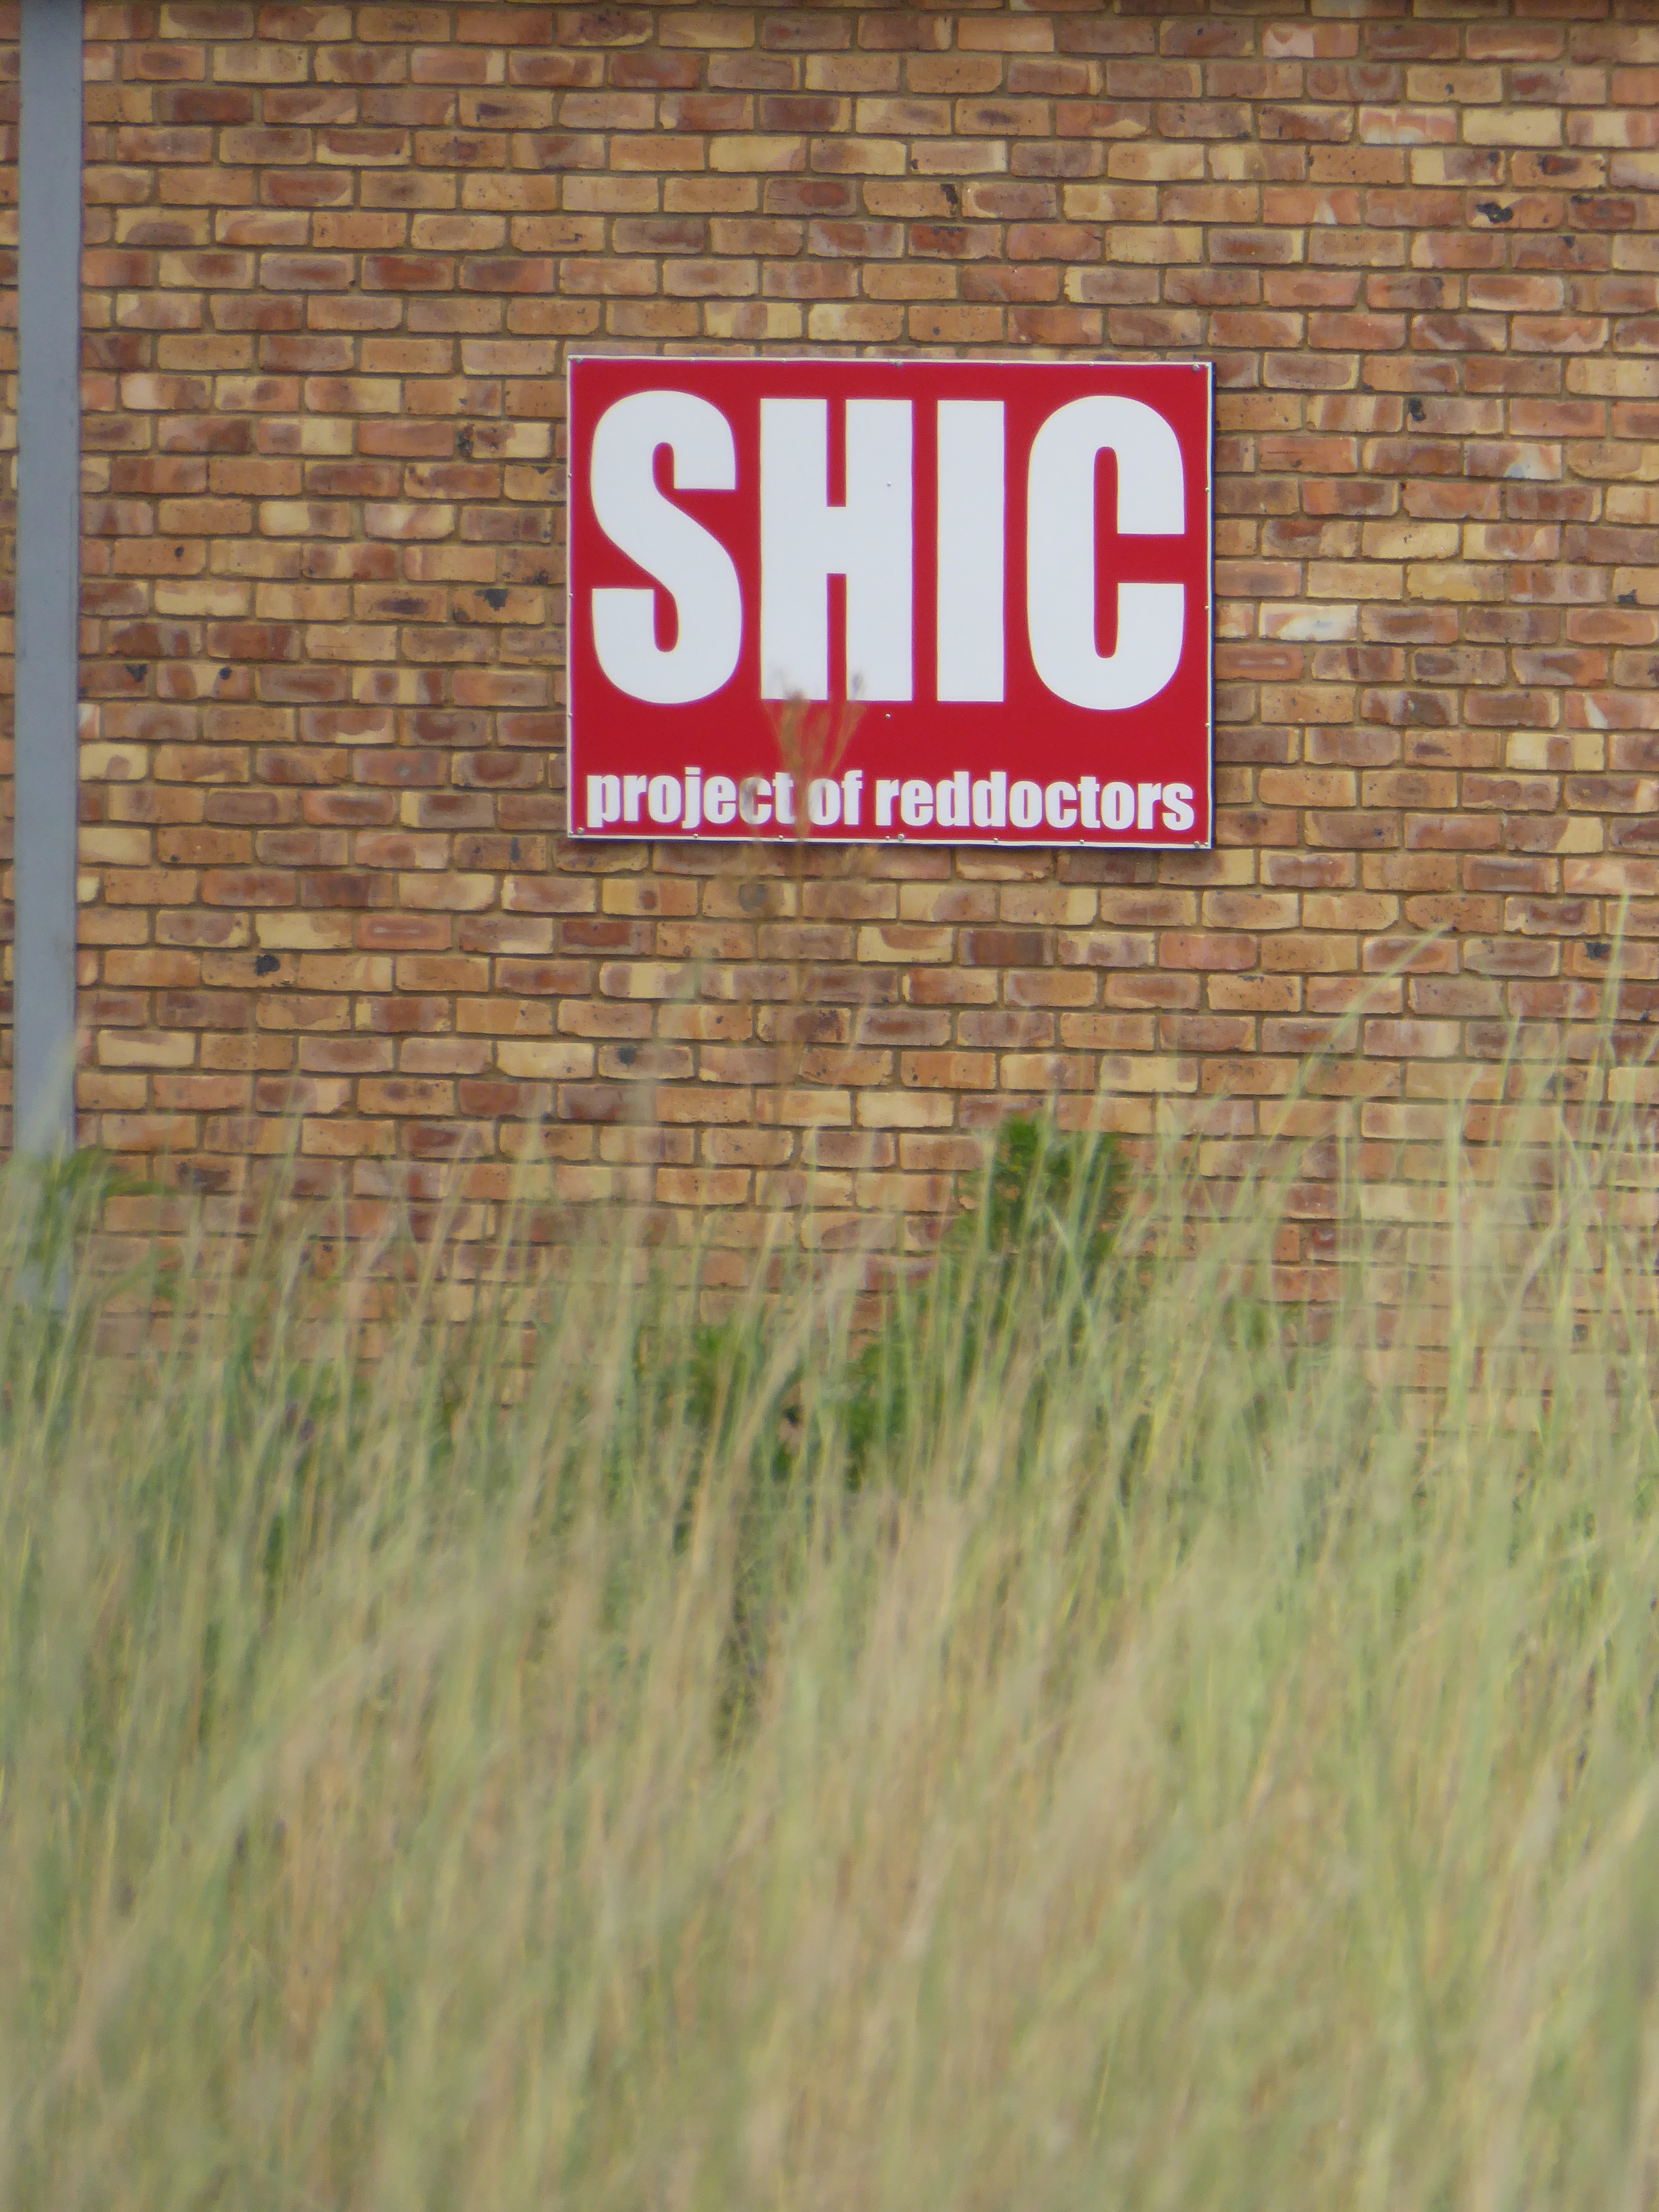 SHIC (Small Hospital Improvement Center)